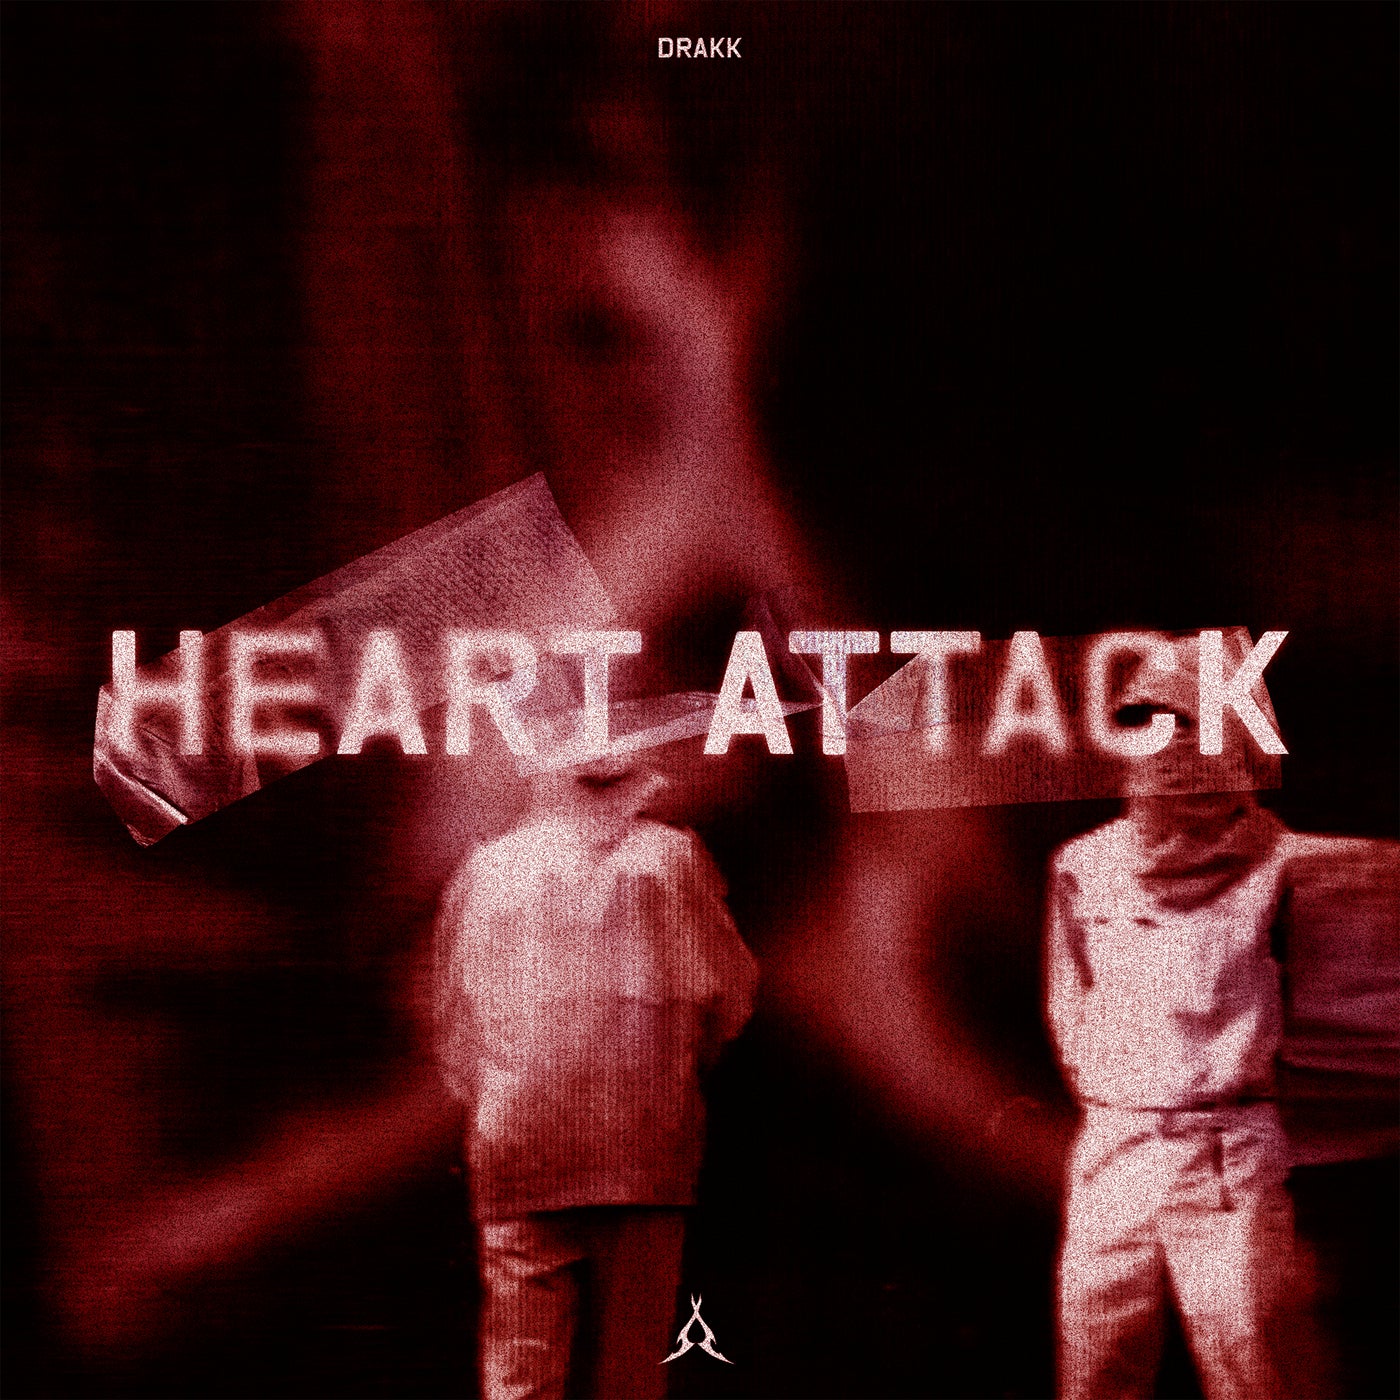 HEART ATTACK